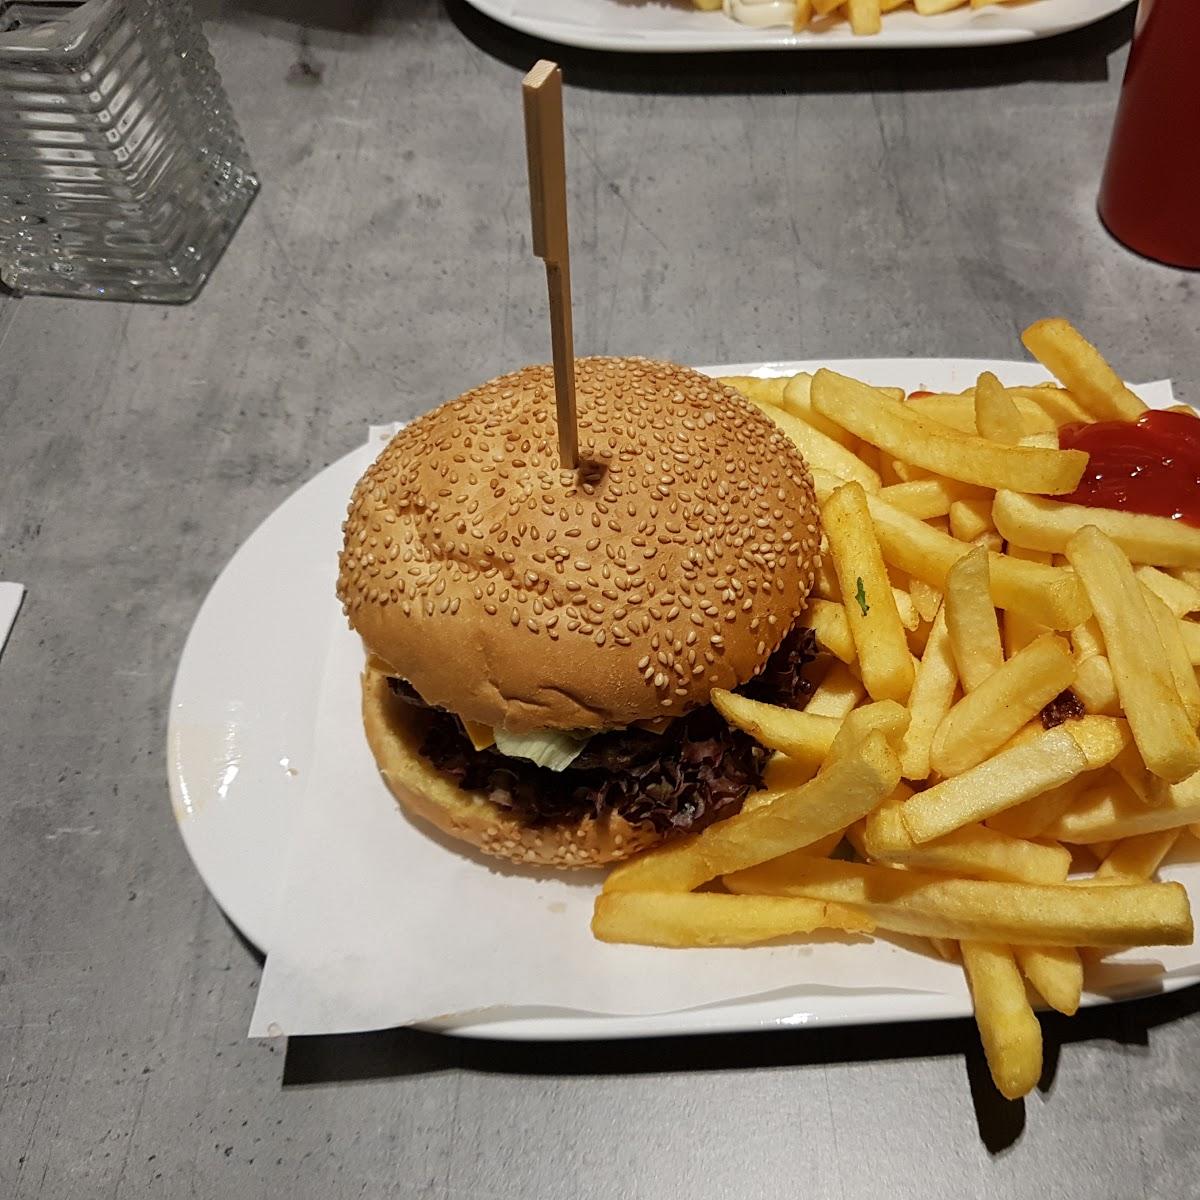 Restaurant "Burger Route 2" in Berlin